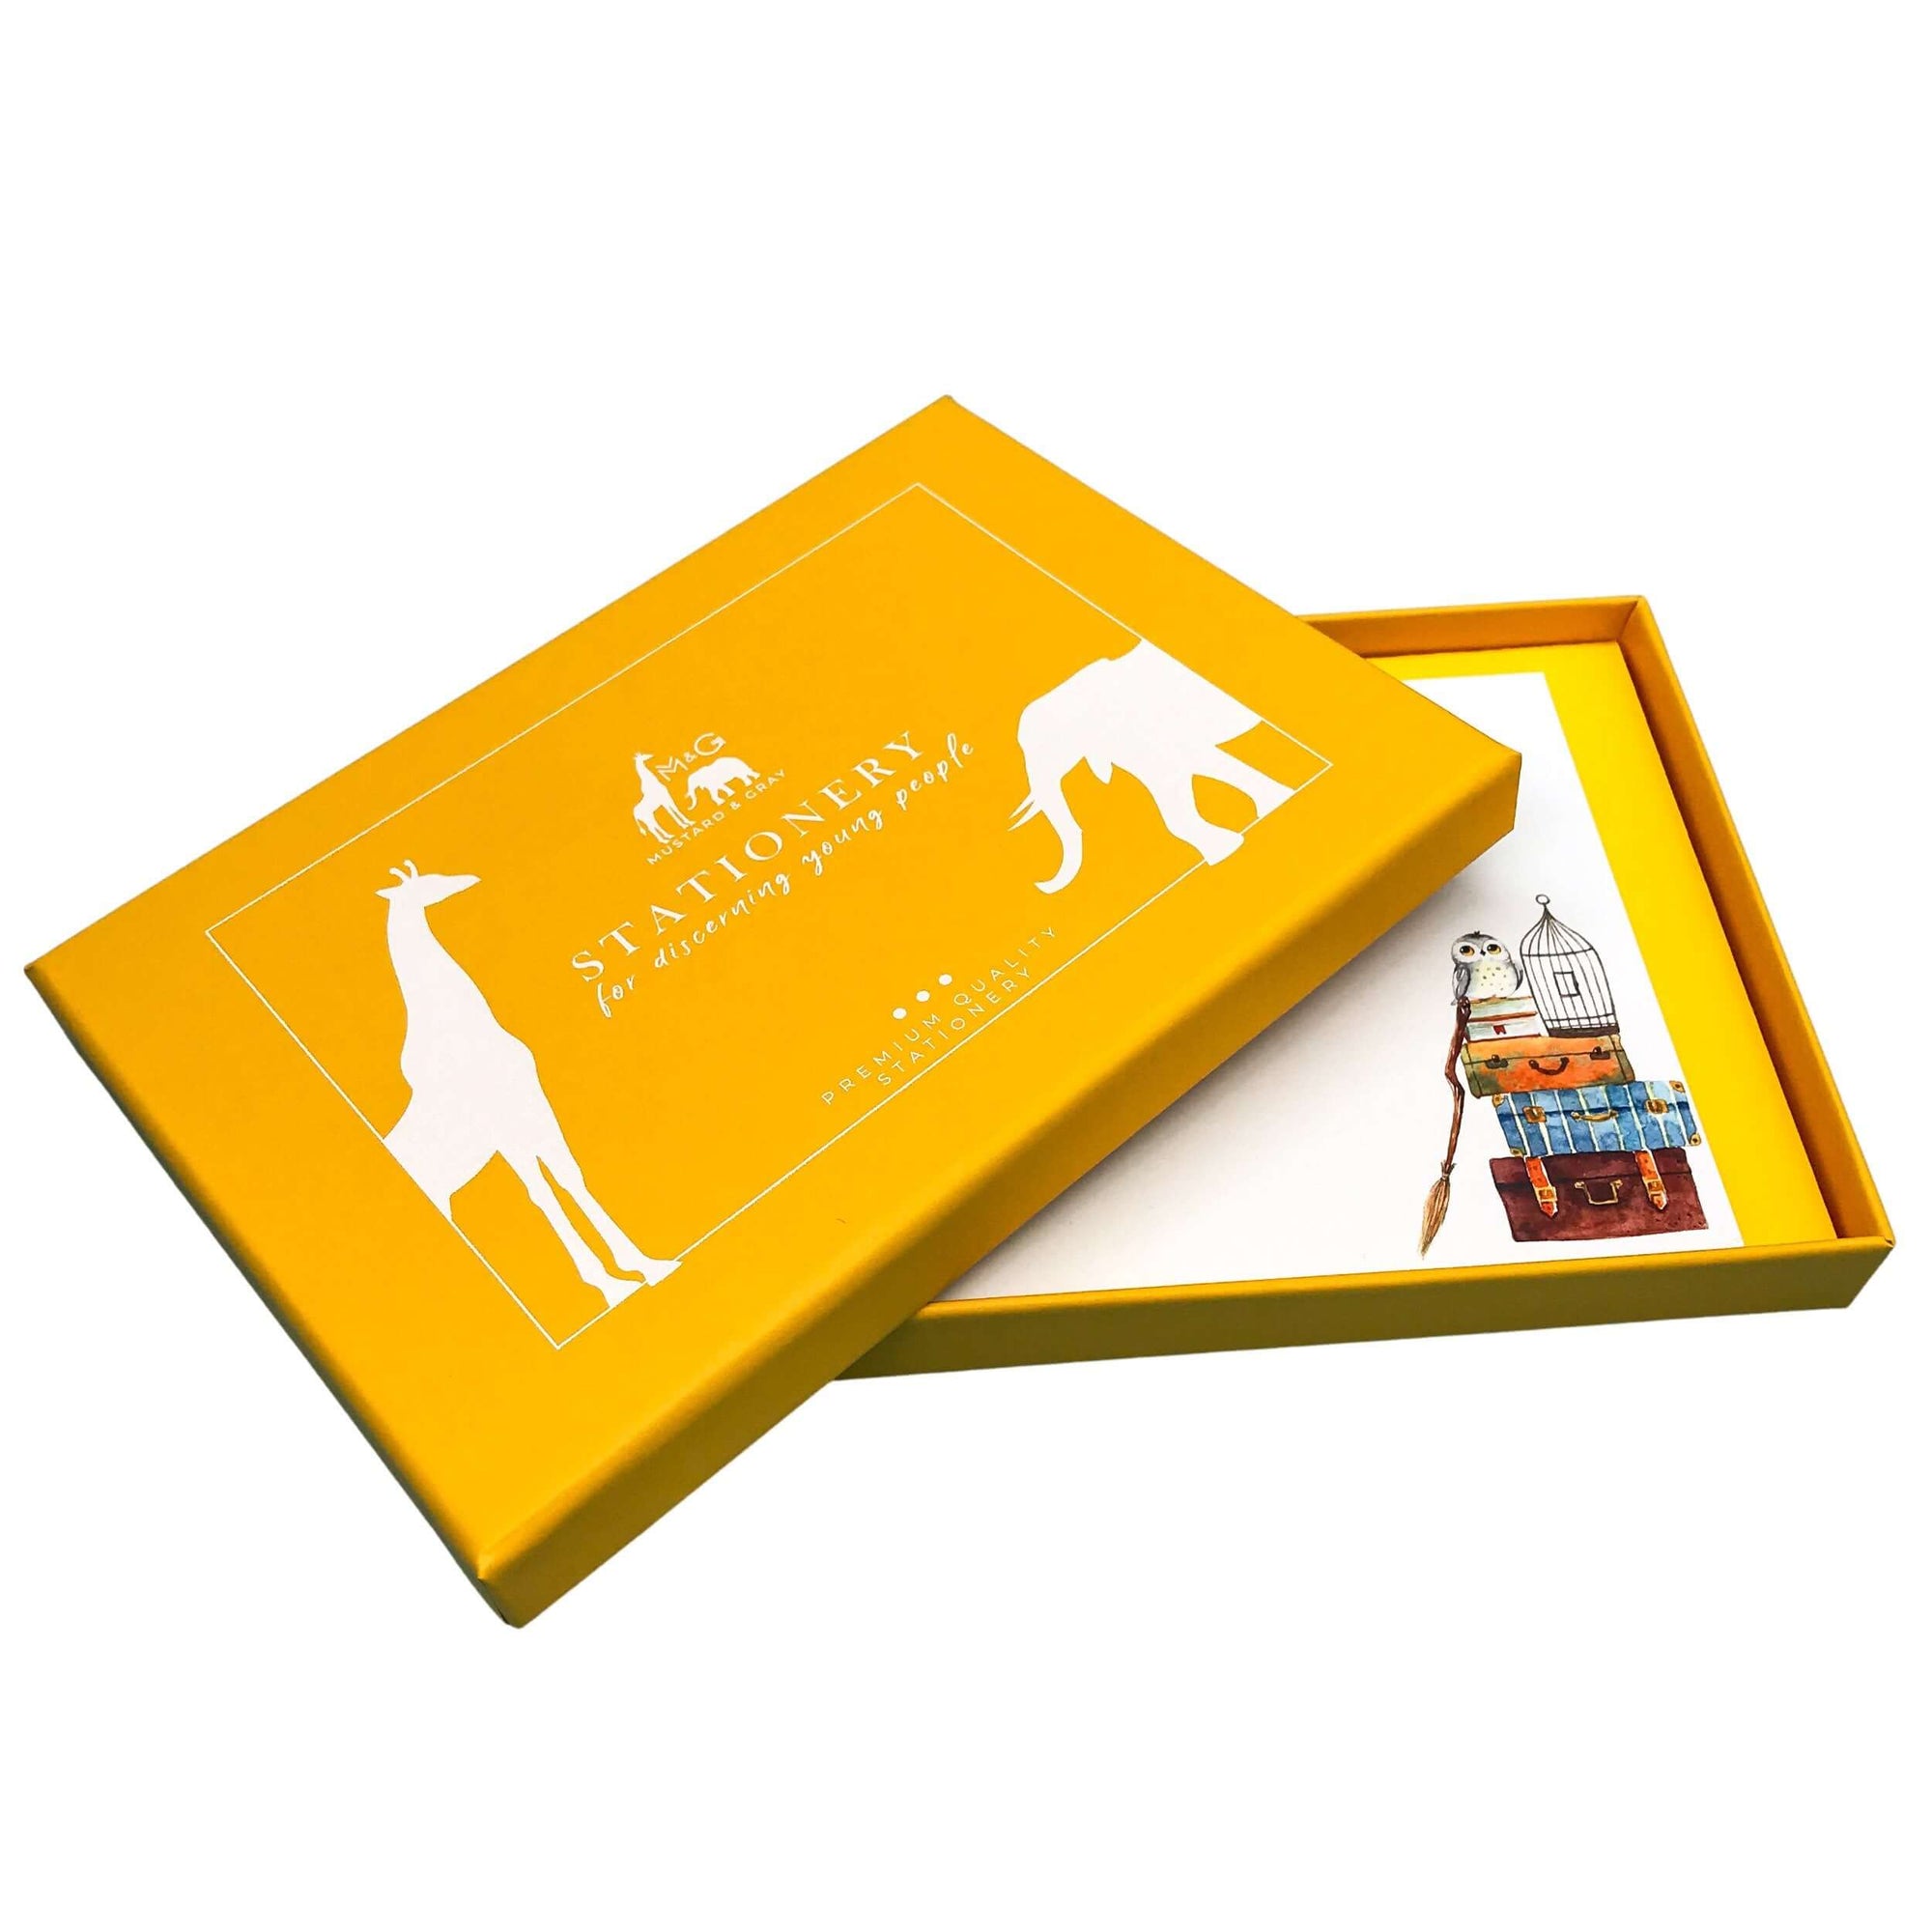 Wizarding World Notecard Set Children's Notecards Mustard and Gray Ltd Shropshire UK